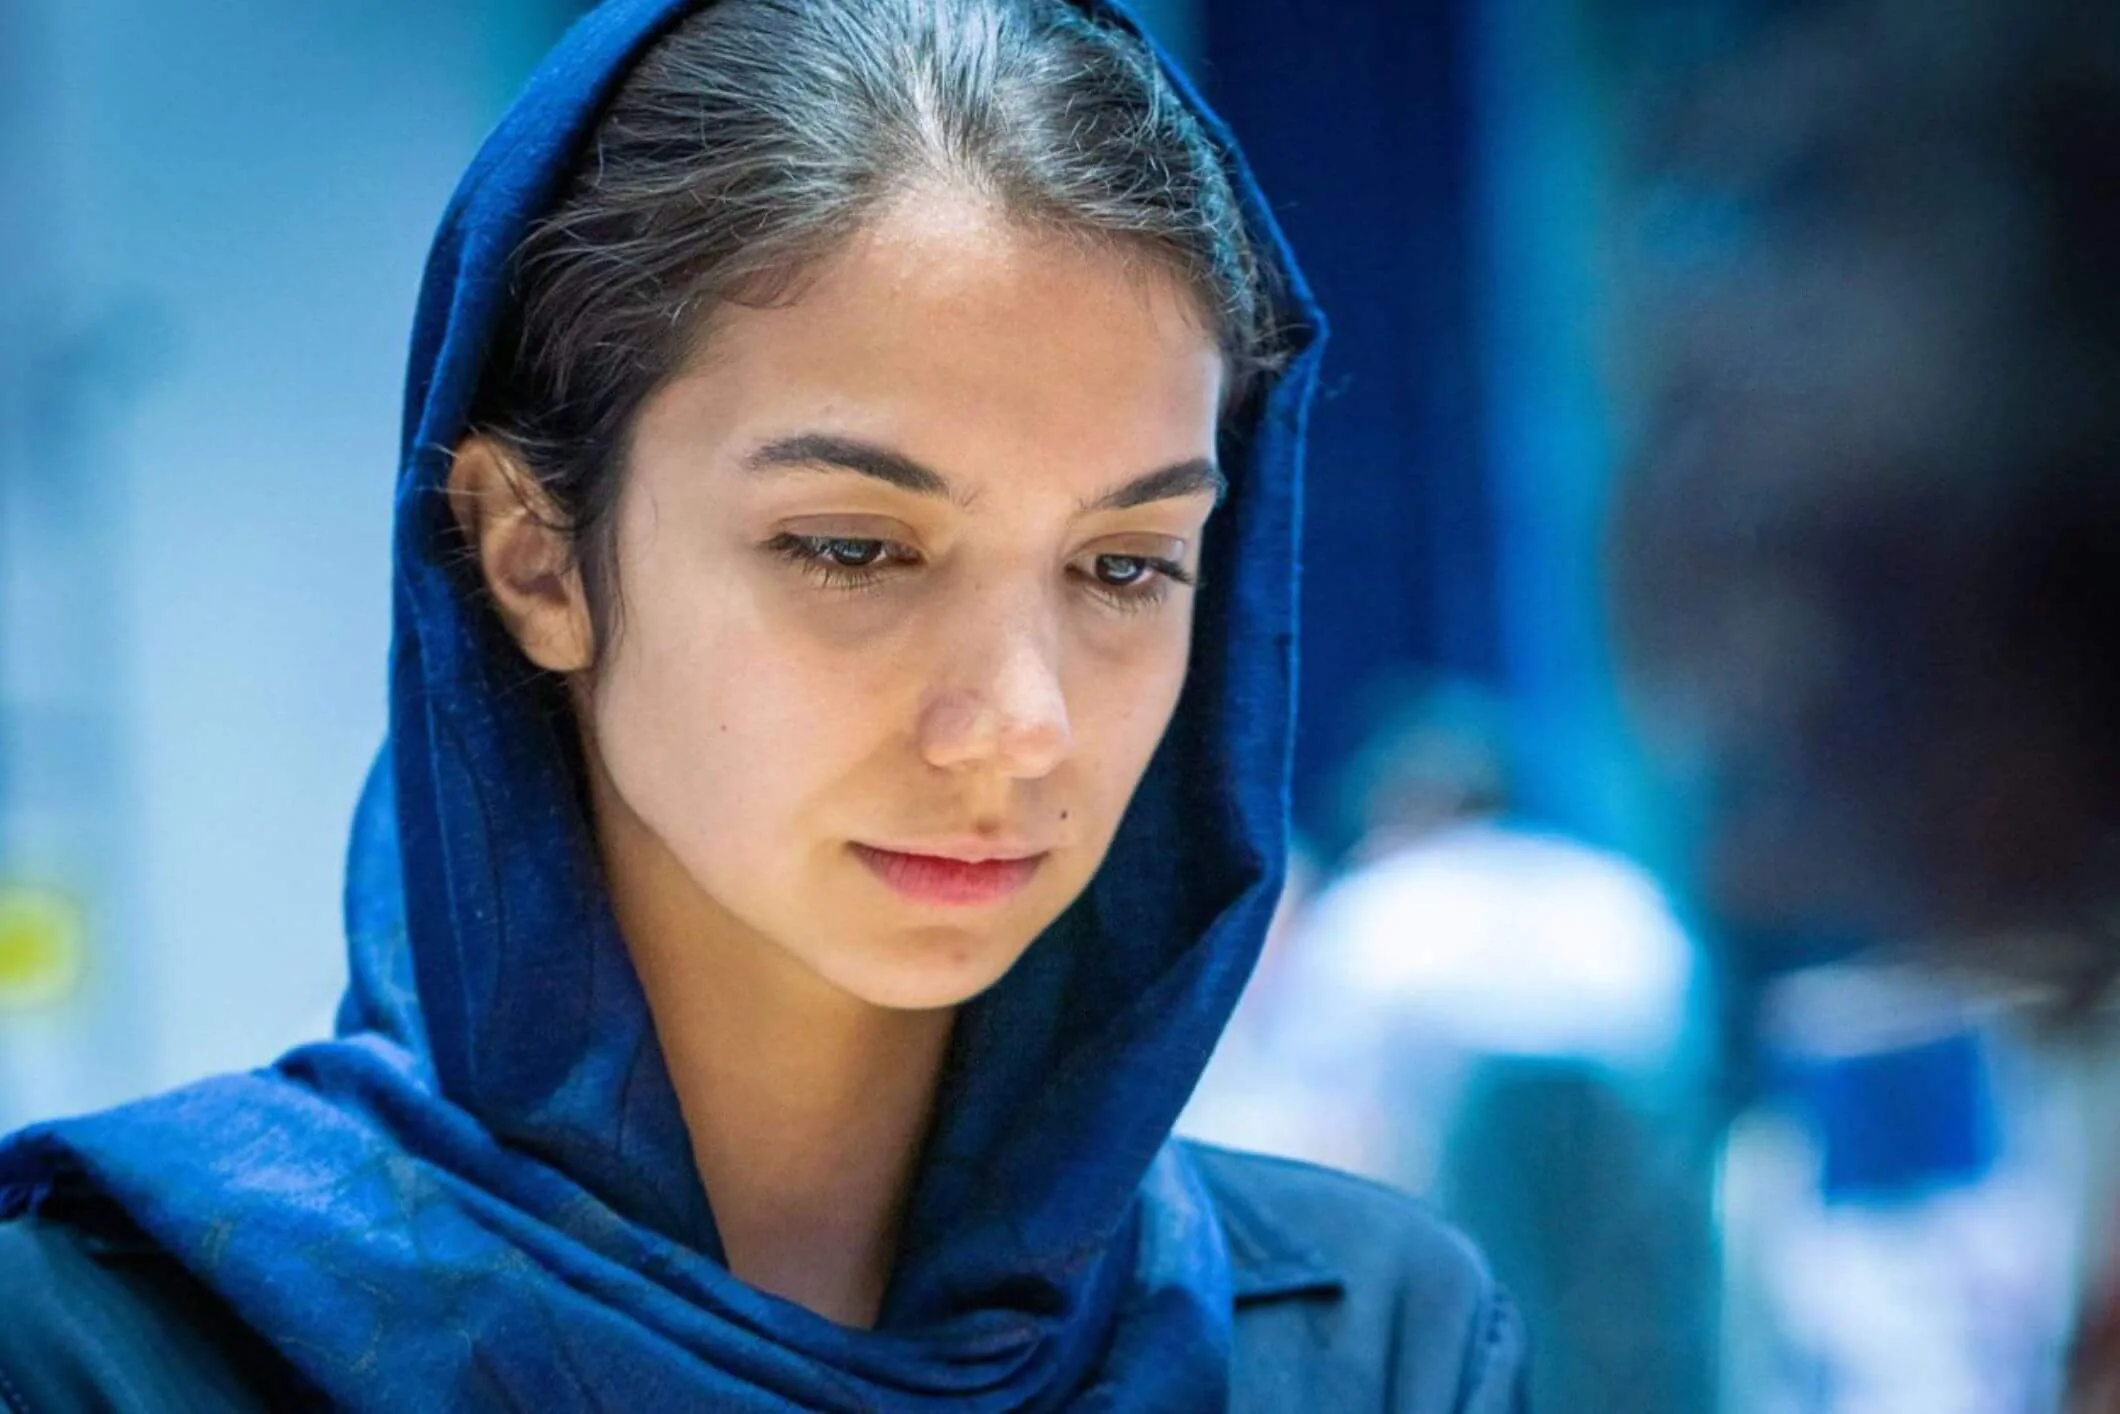 Iranian Woman Competes At Chess Tournament Without Wearing Hijab